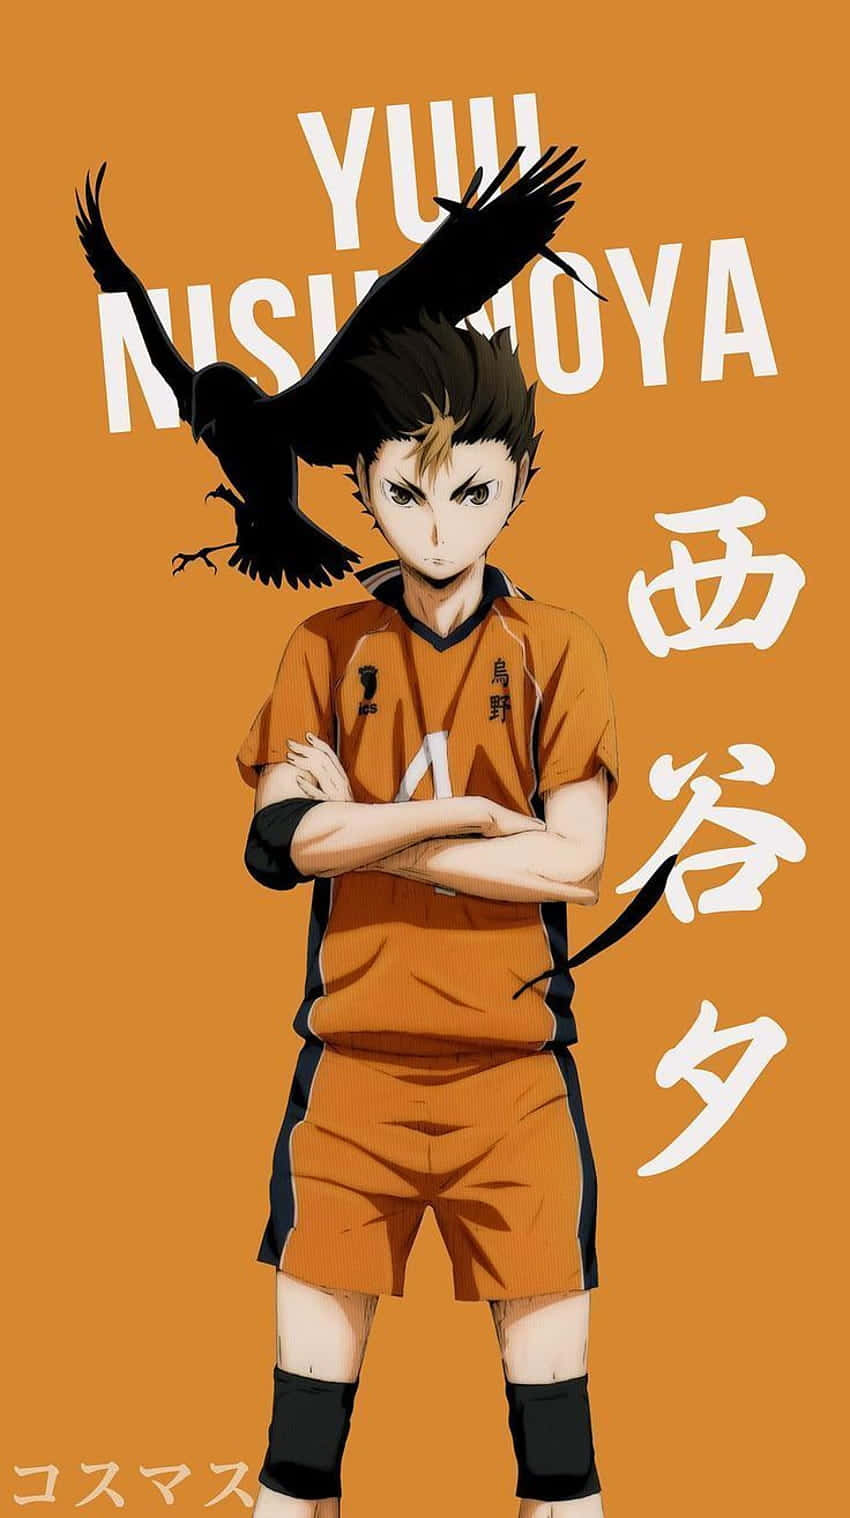 Haikyuu to the Top - Anime volleyball, Haikyuu wallpaper, Karasuno, Poster